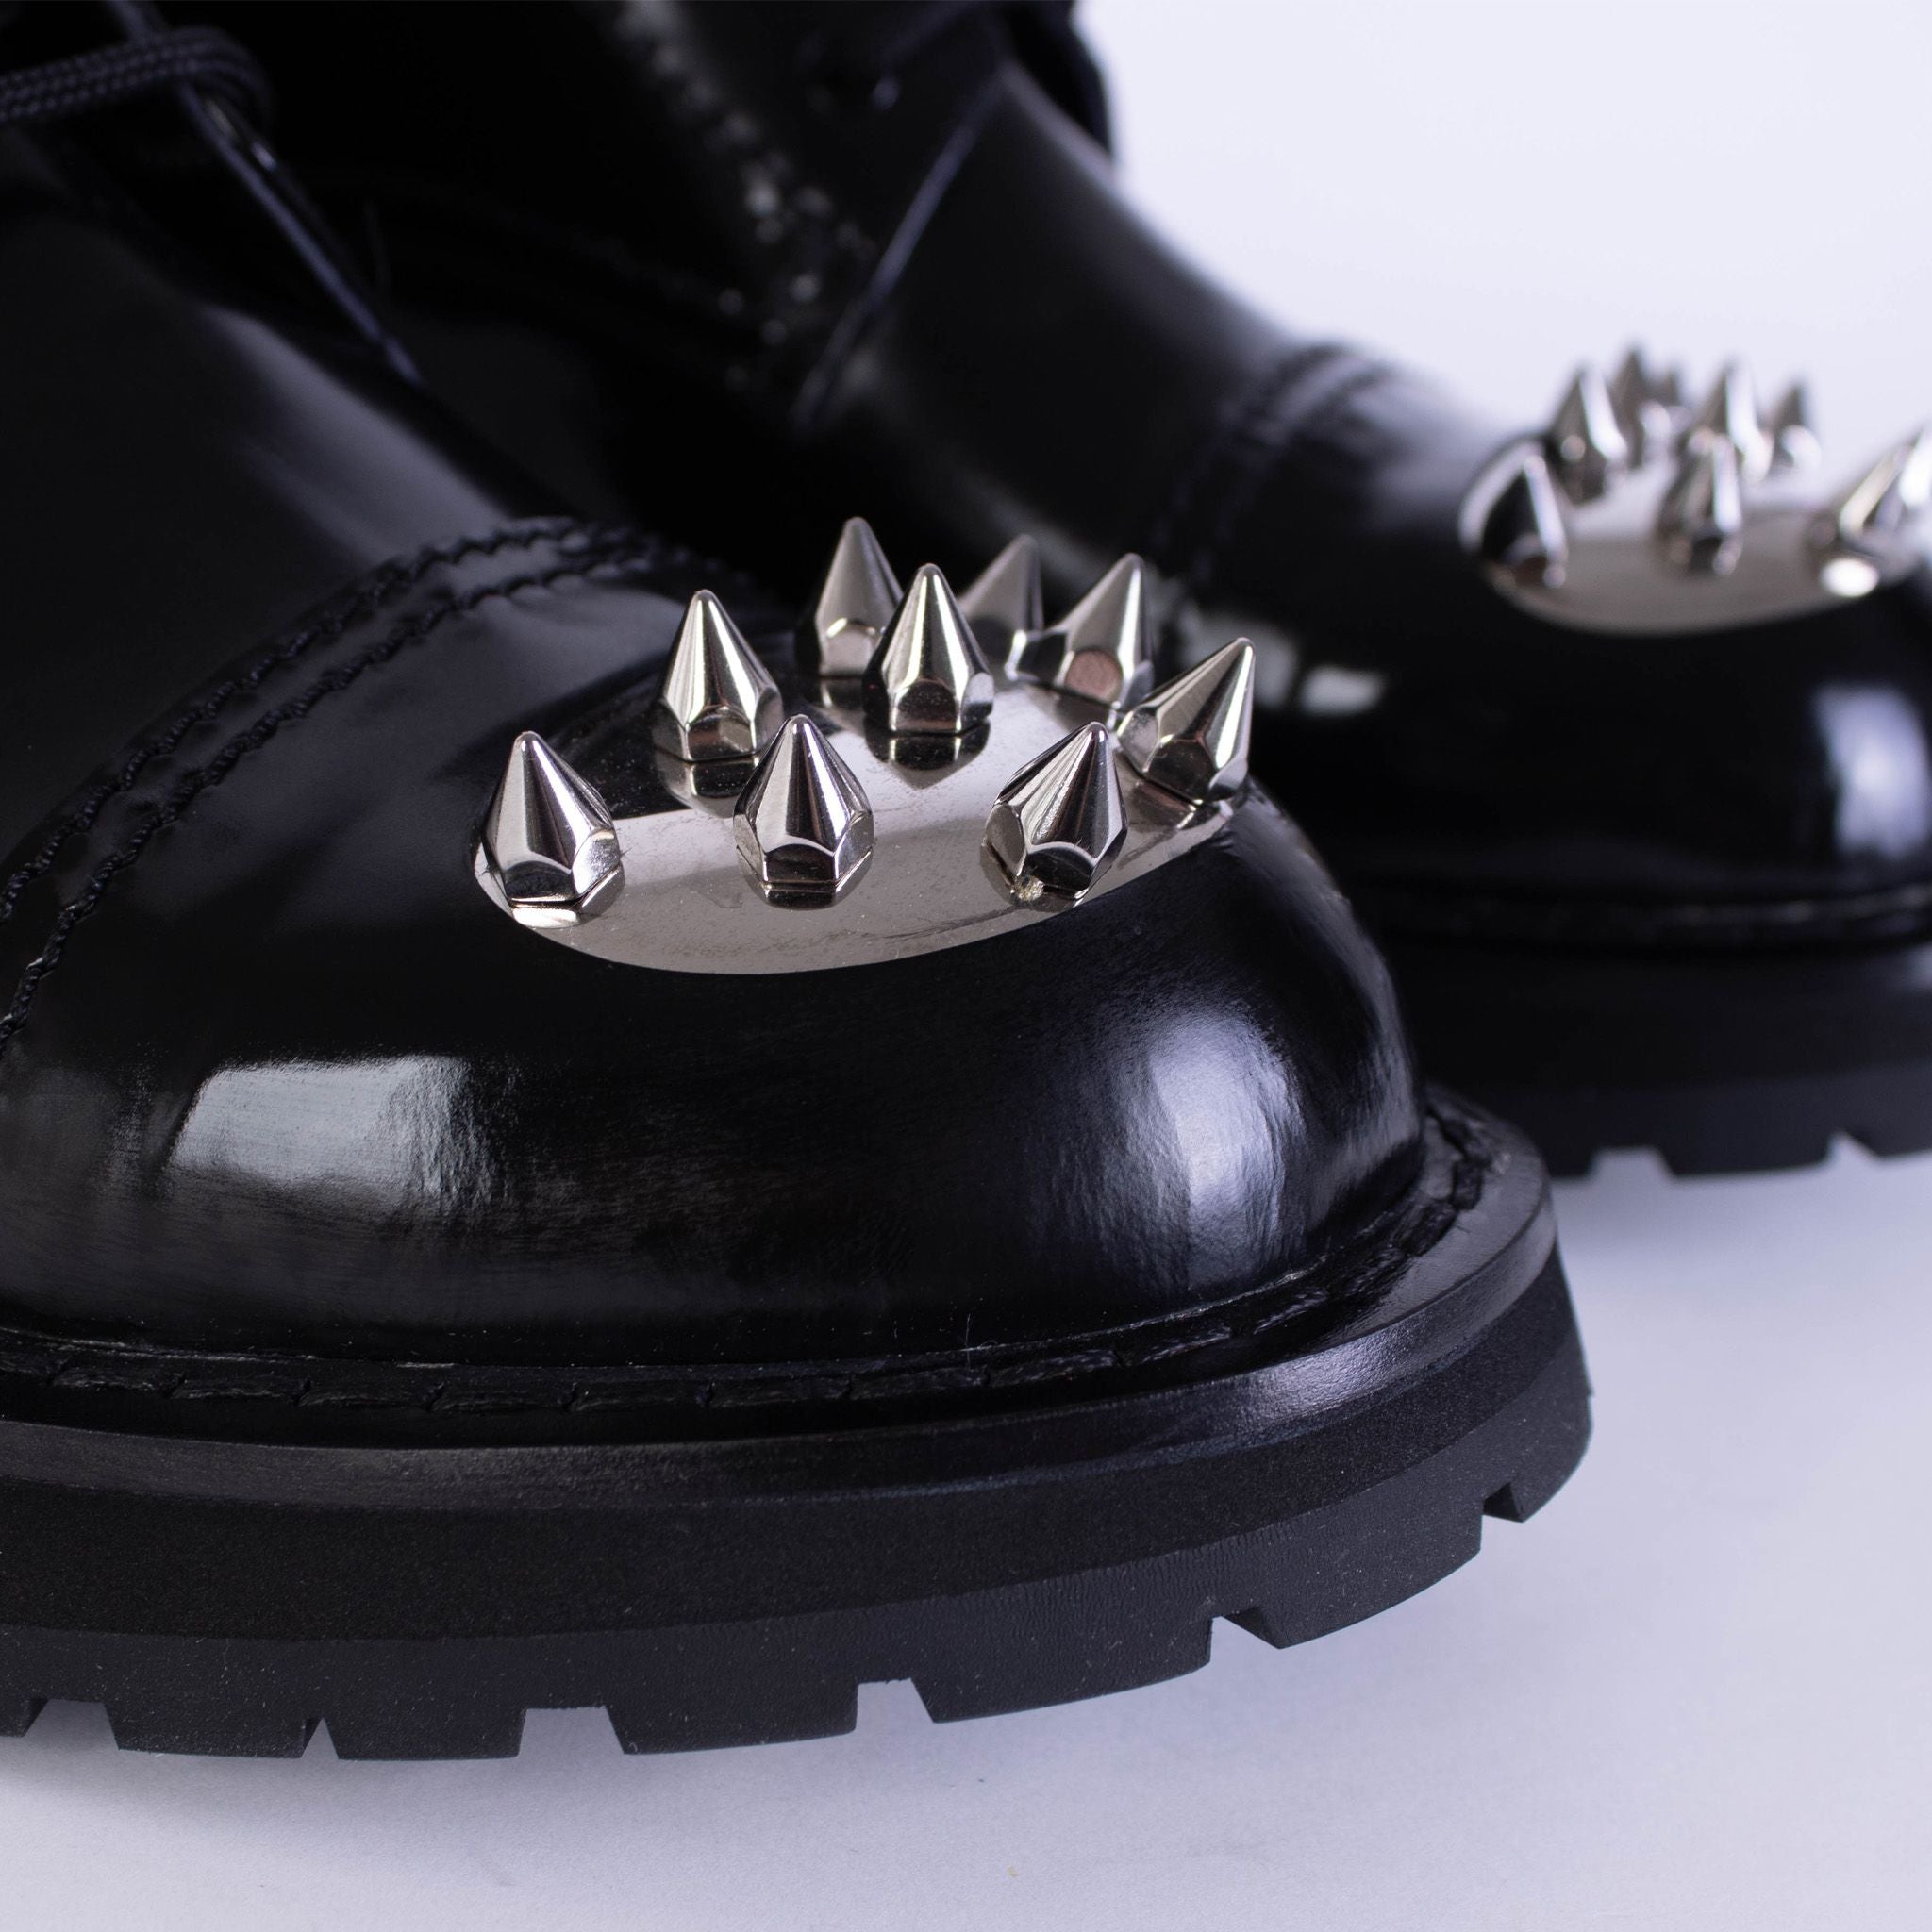 Alexander McQueen Black Leather Studded Combat Boots